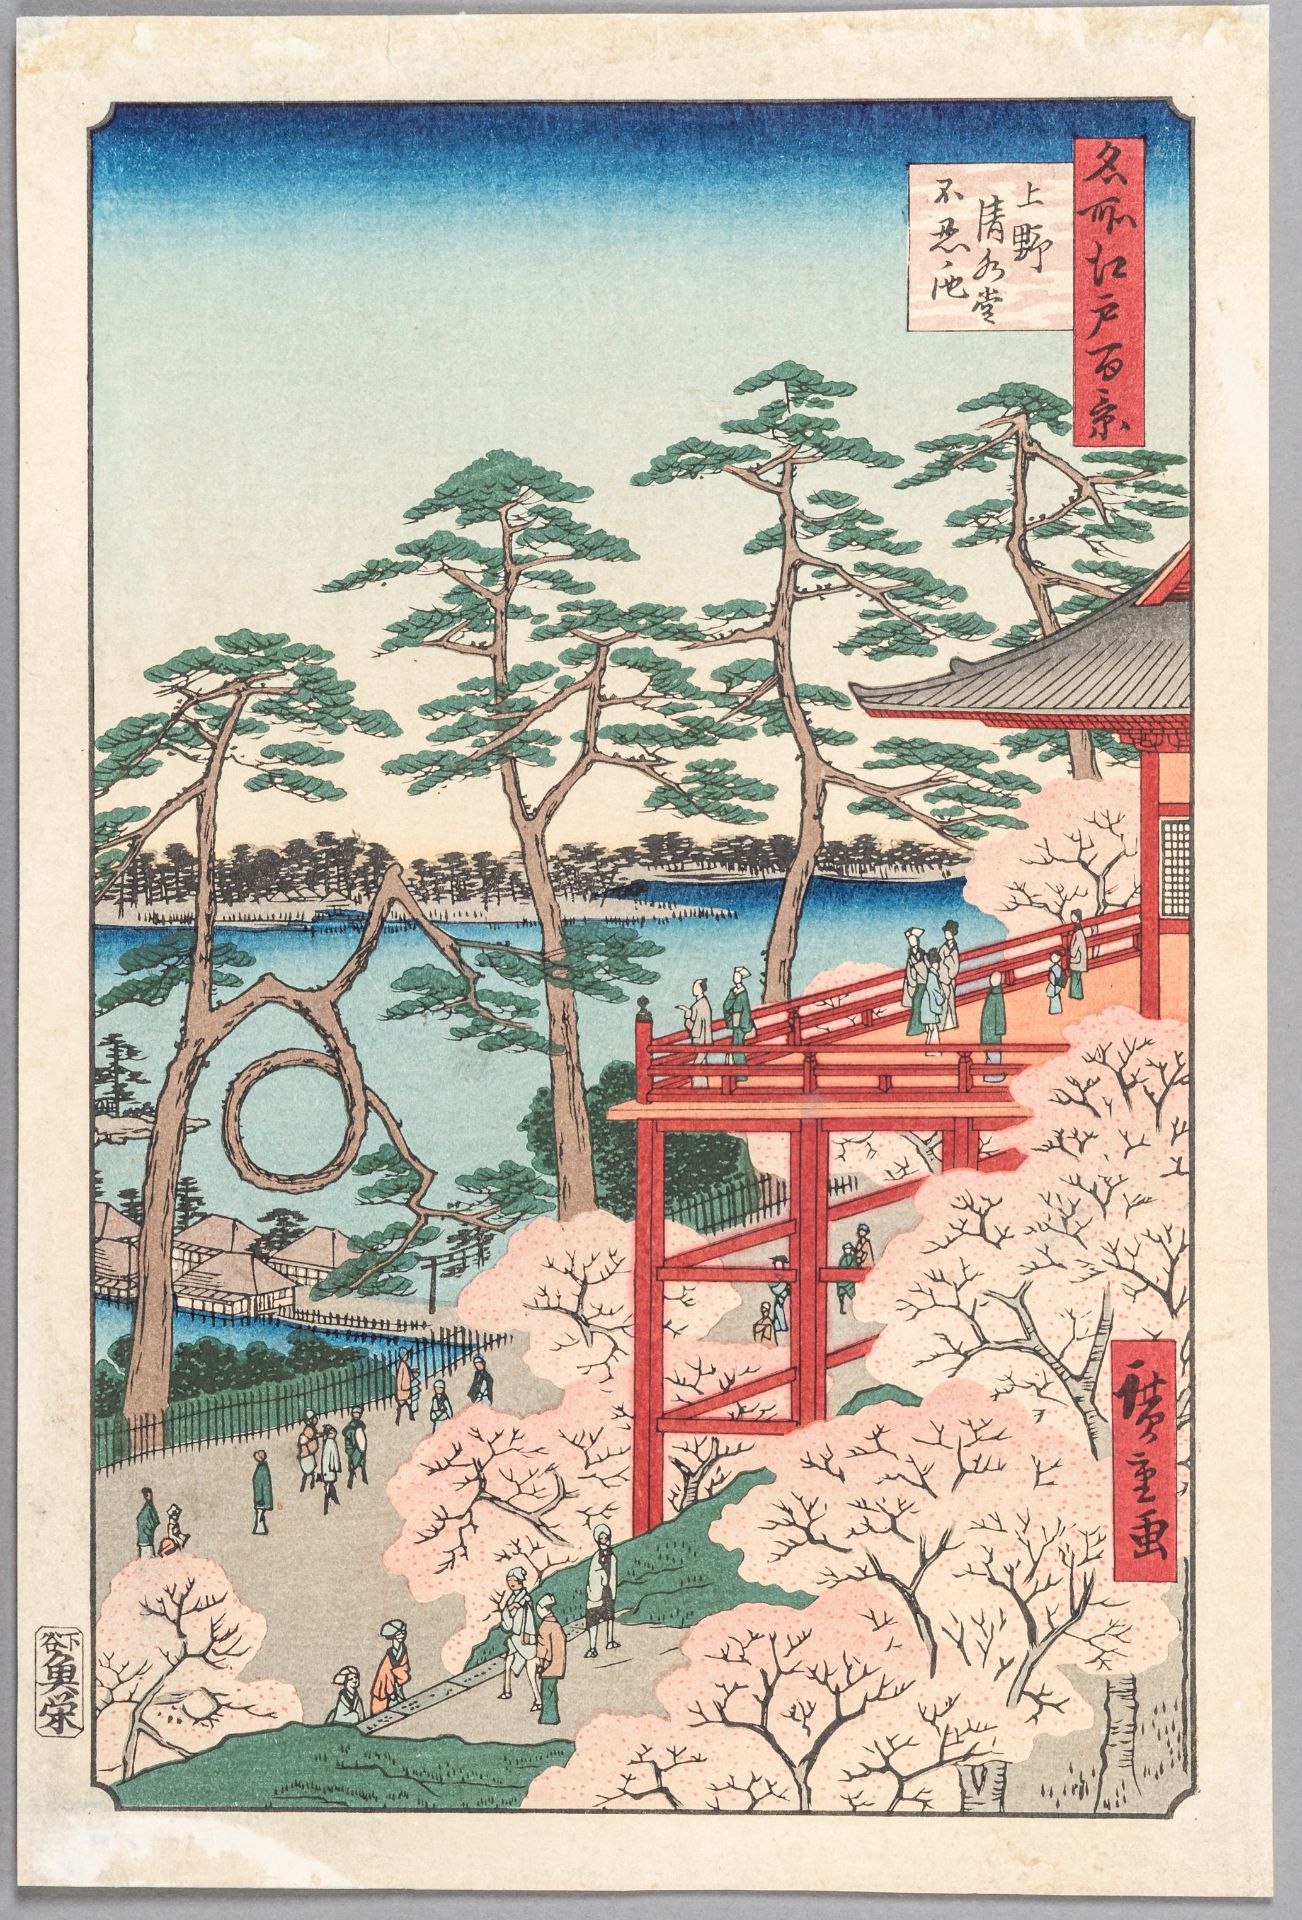 UTAGAWA HIROSHIGE (1797-1858): KIYOMIZU HALL AND SHINOBAZU POND AT UENO